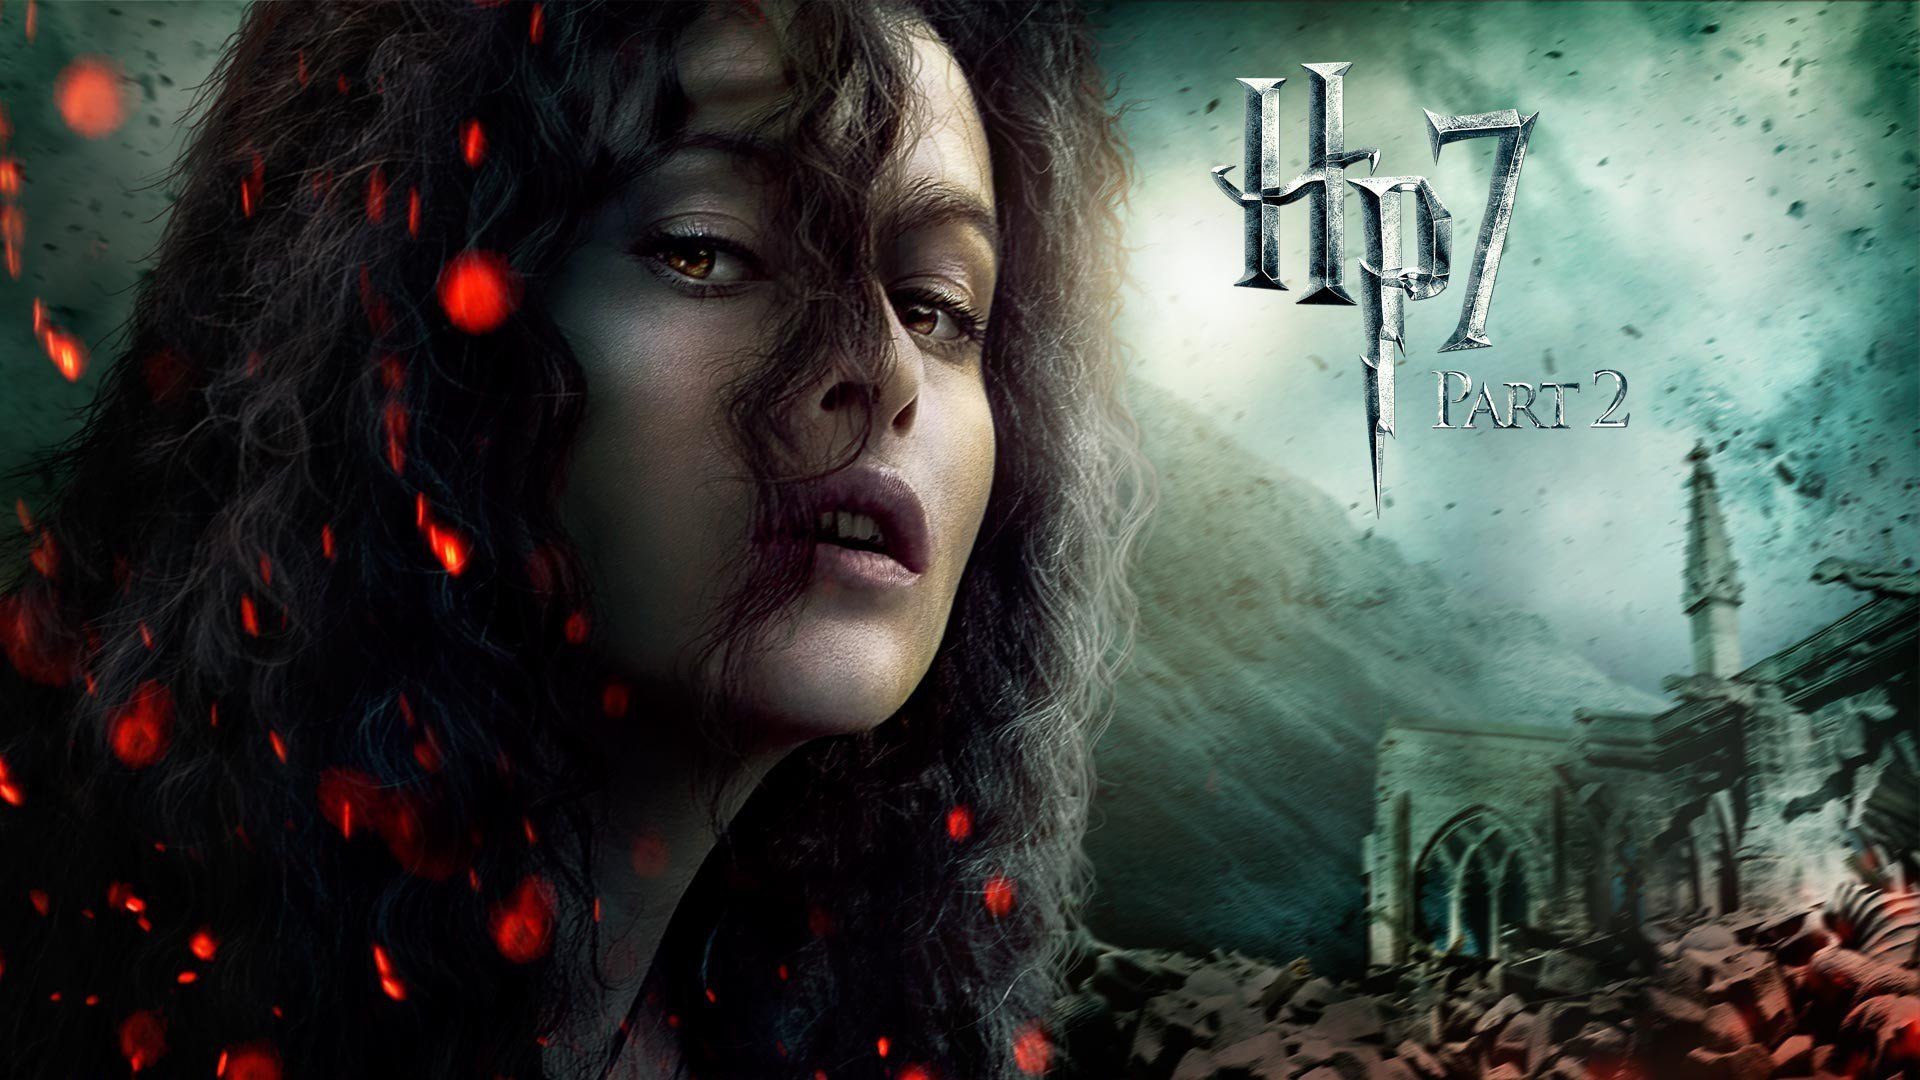 Helena Bonham Carter Harry Potter Movie Wallpaper – 1080p Full HD Wallpaper